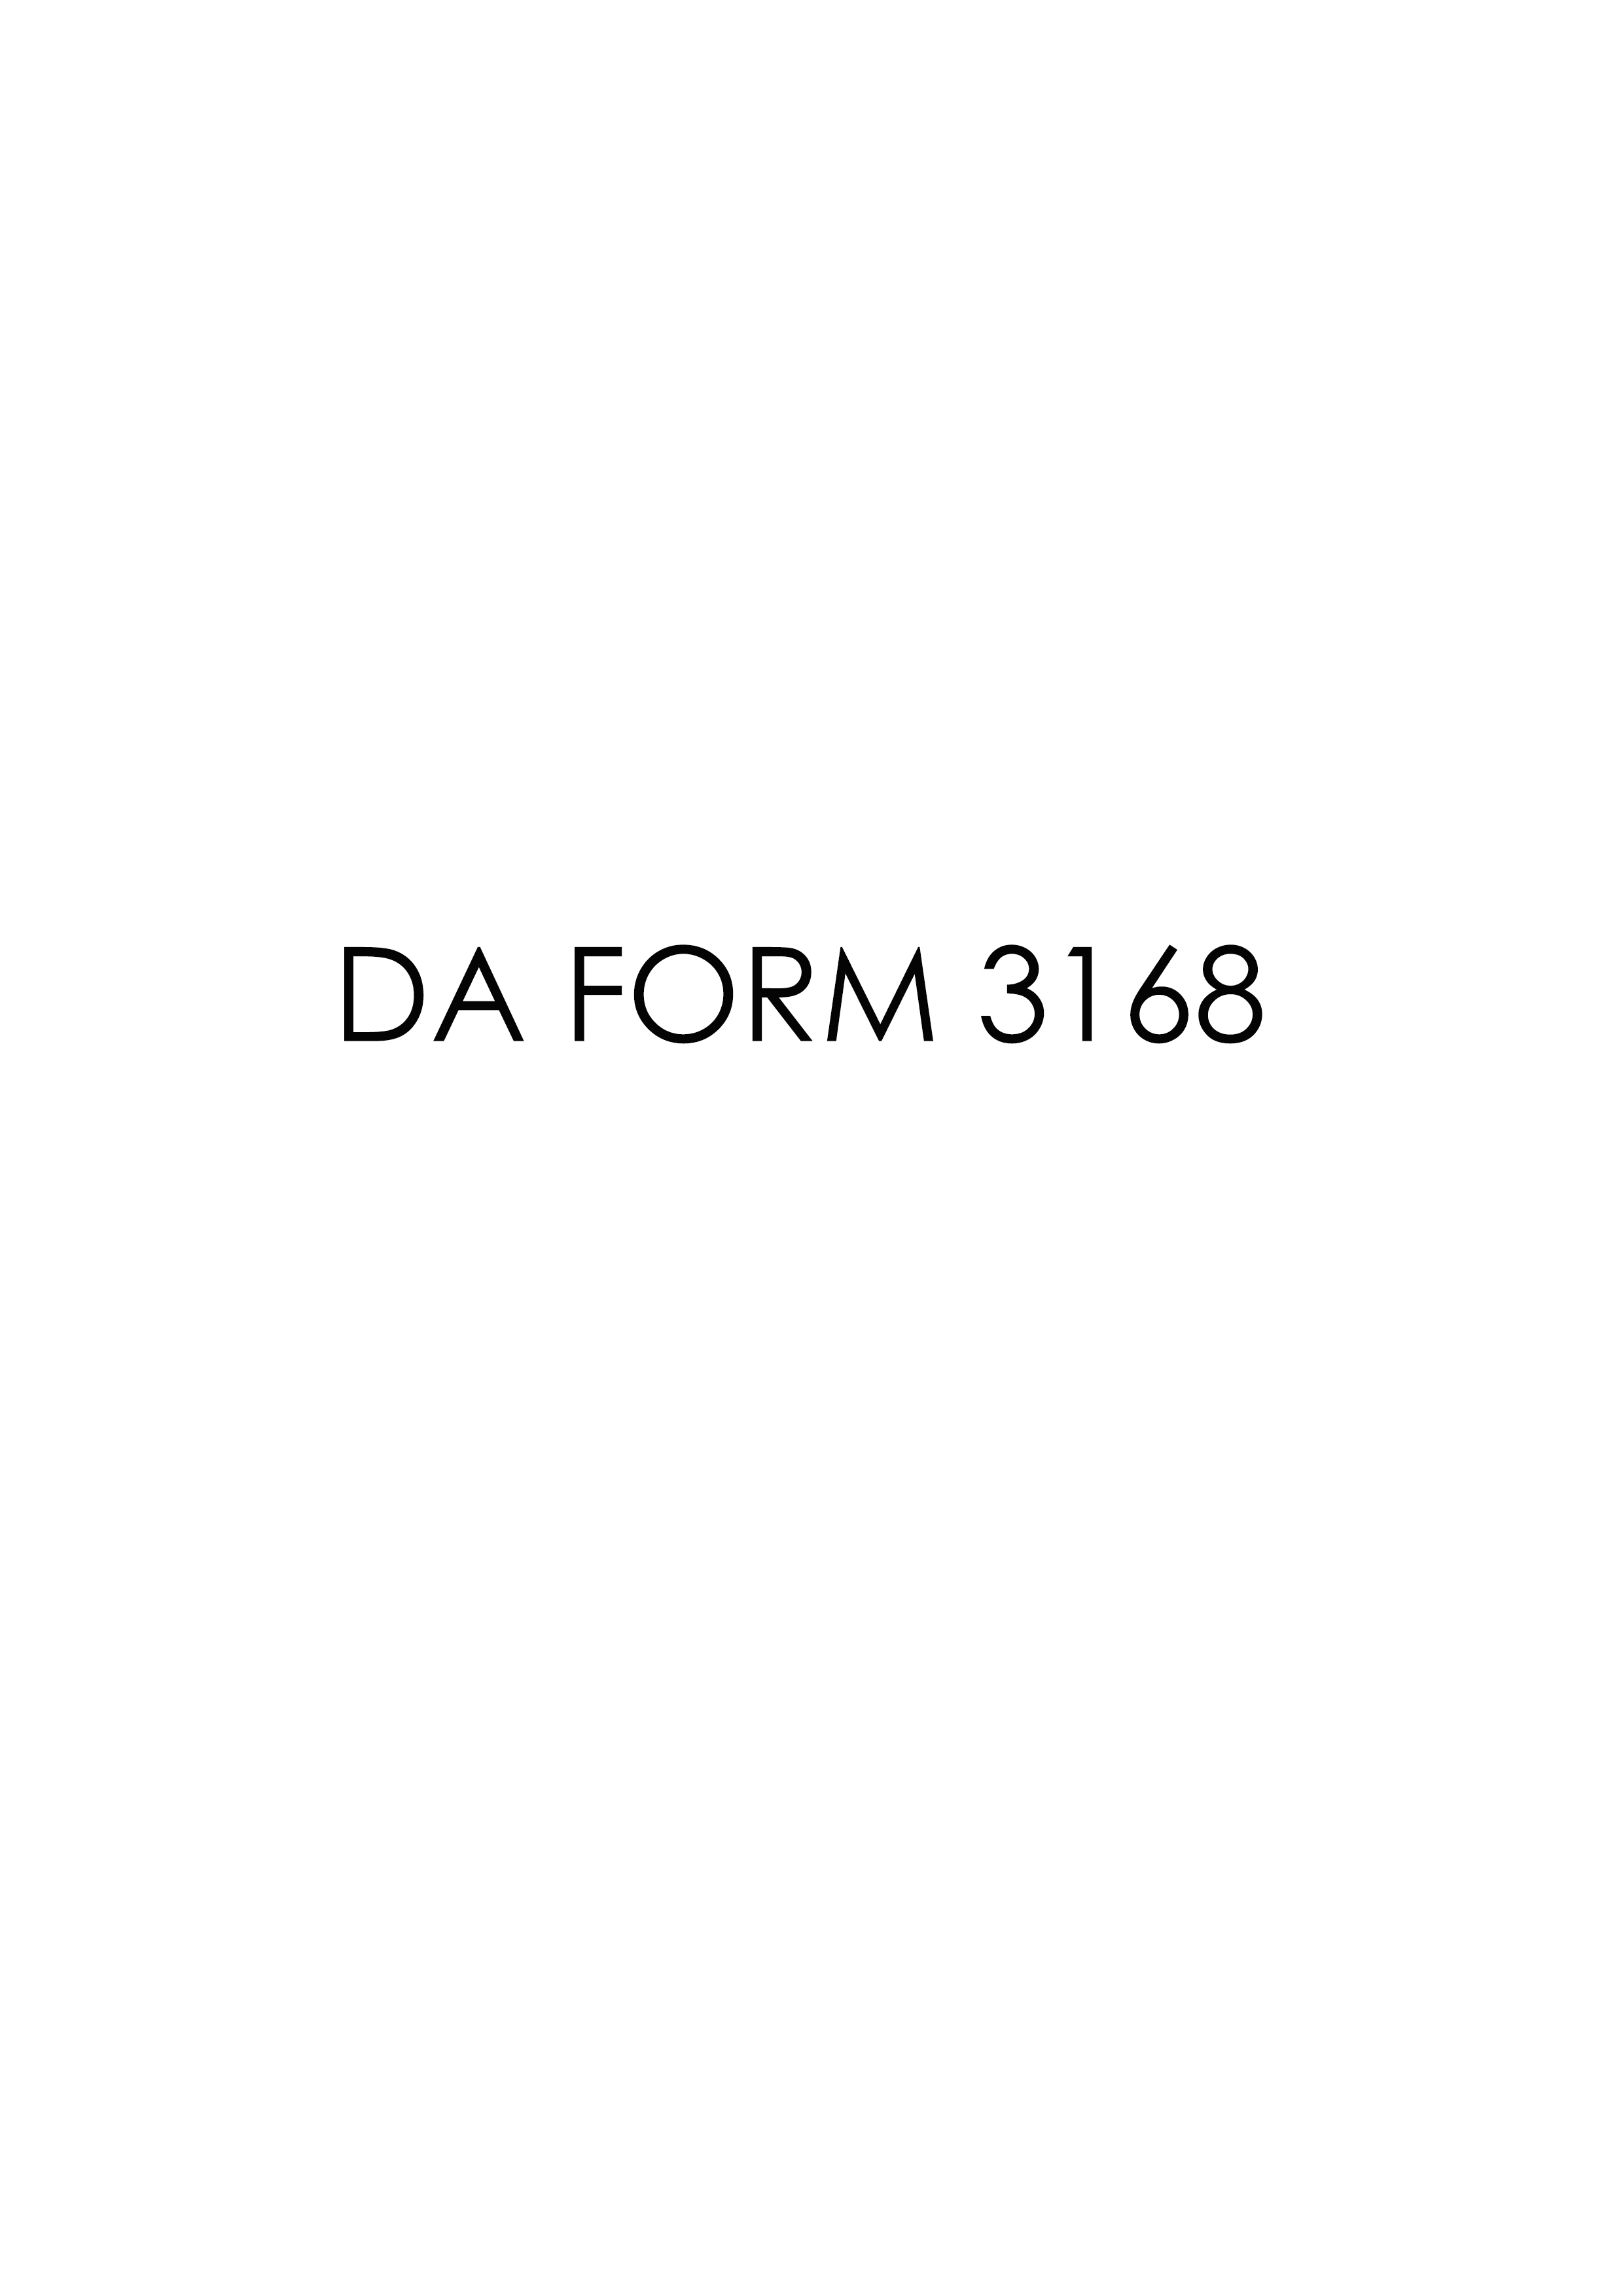 da Form 3168 fillable